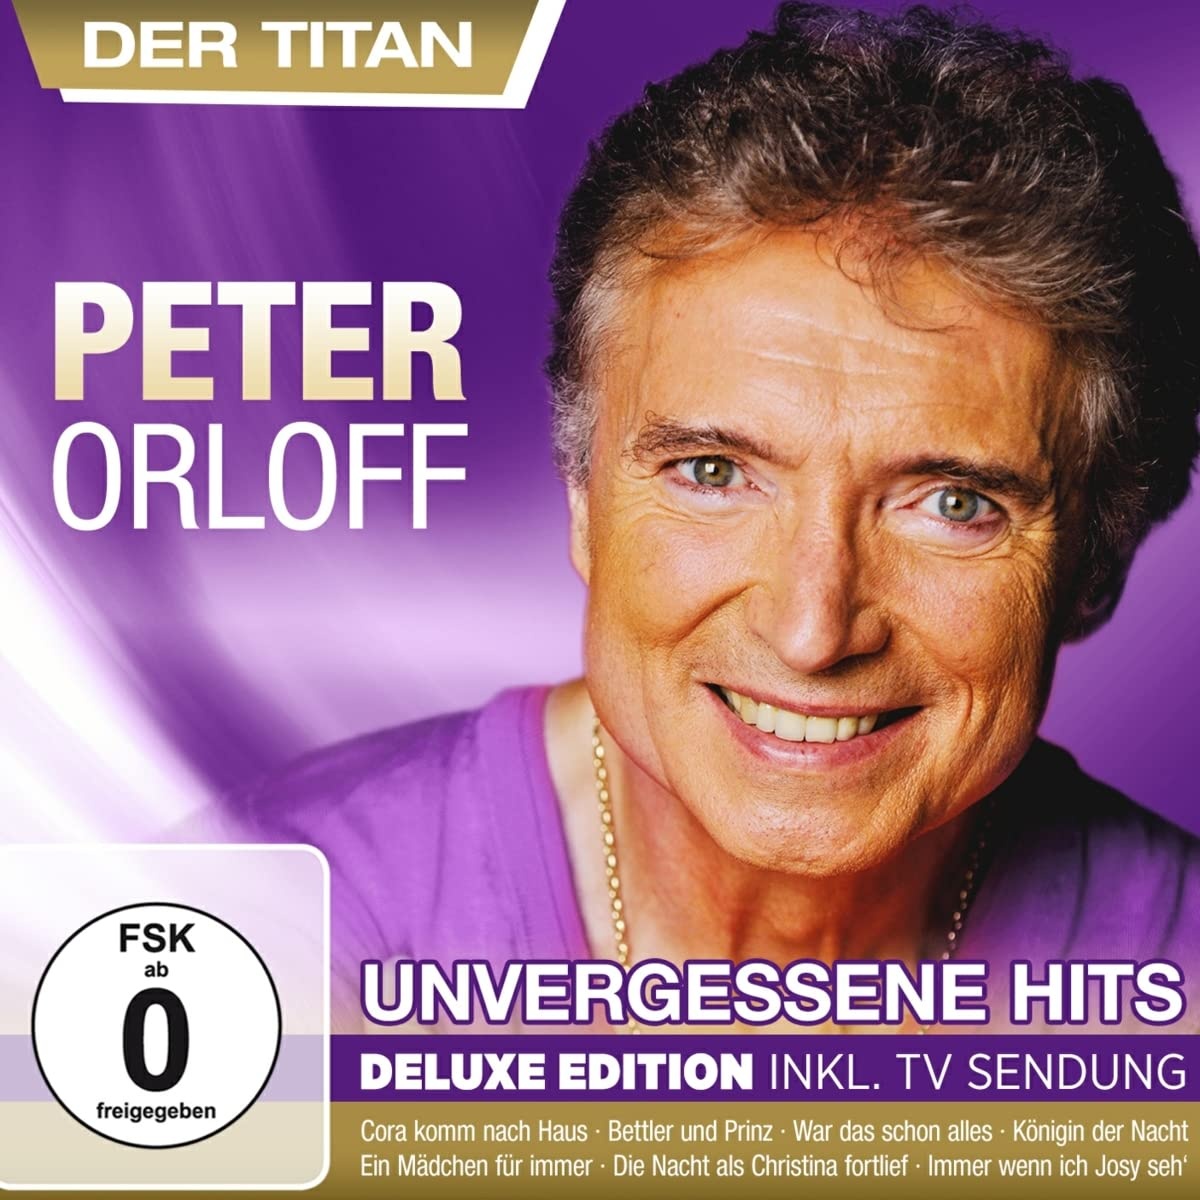 Unvergessene Hits - Deluxe Edition inkl. TV-Sendung (Neu differenzbesteuert)